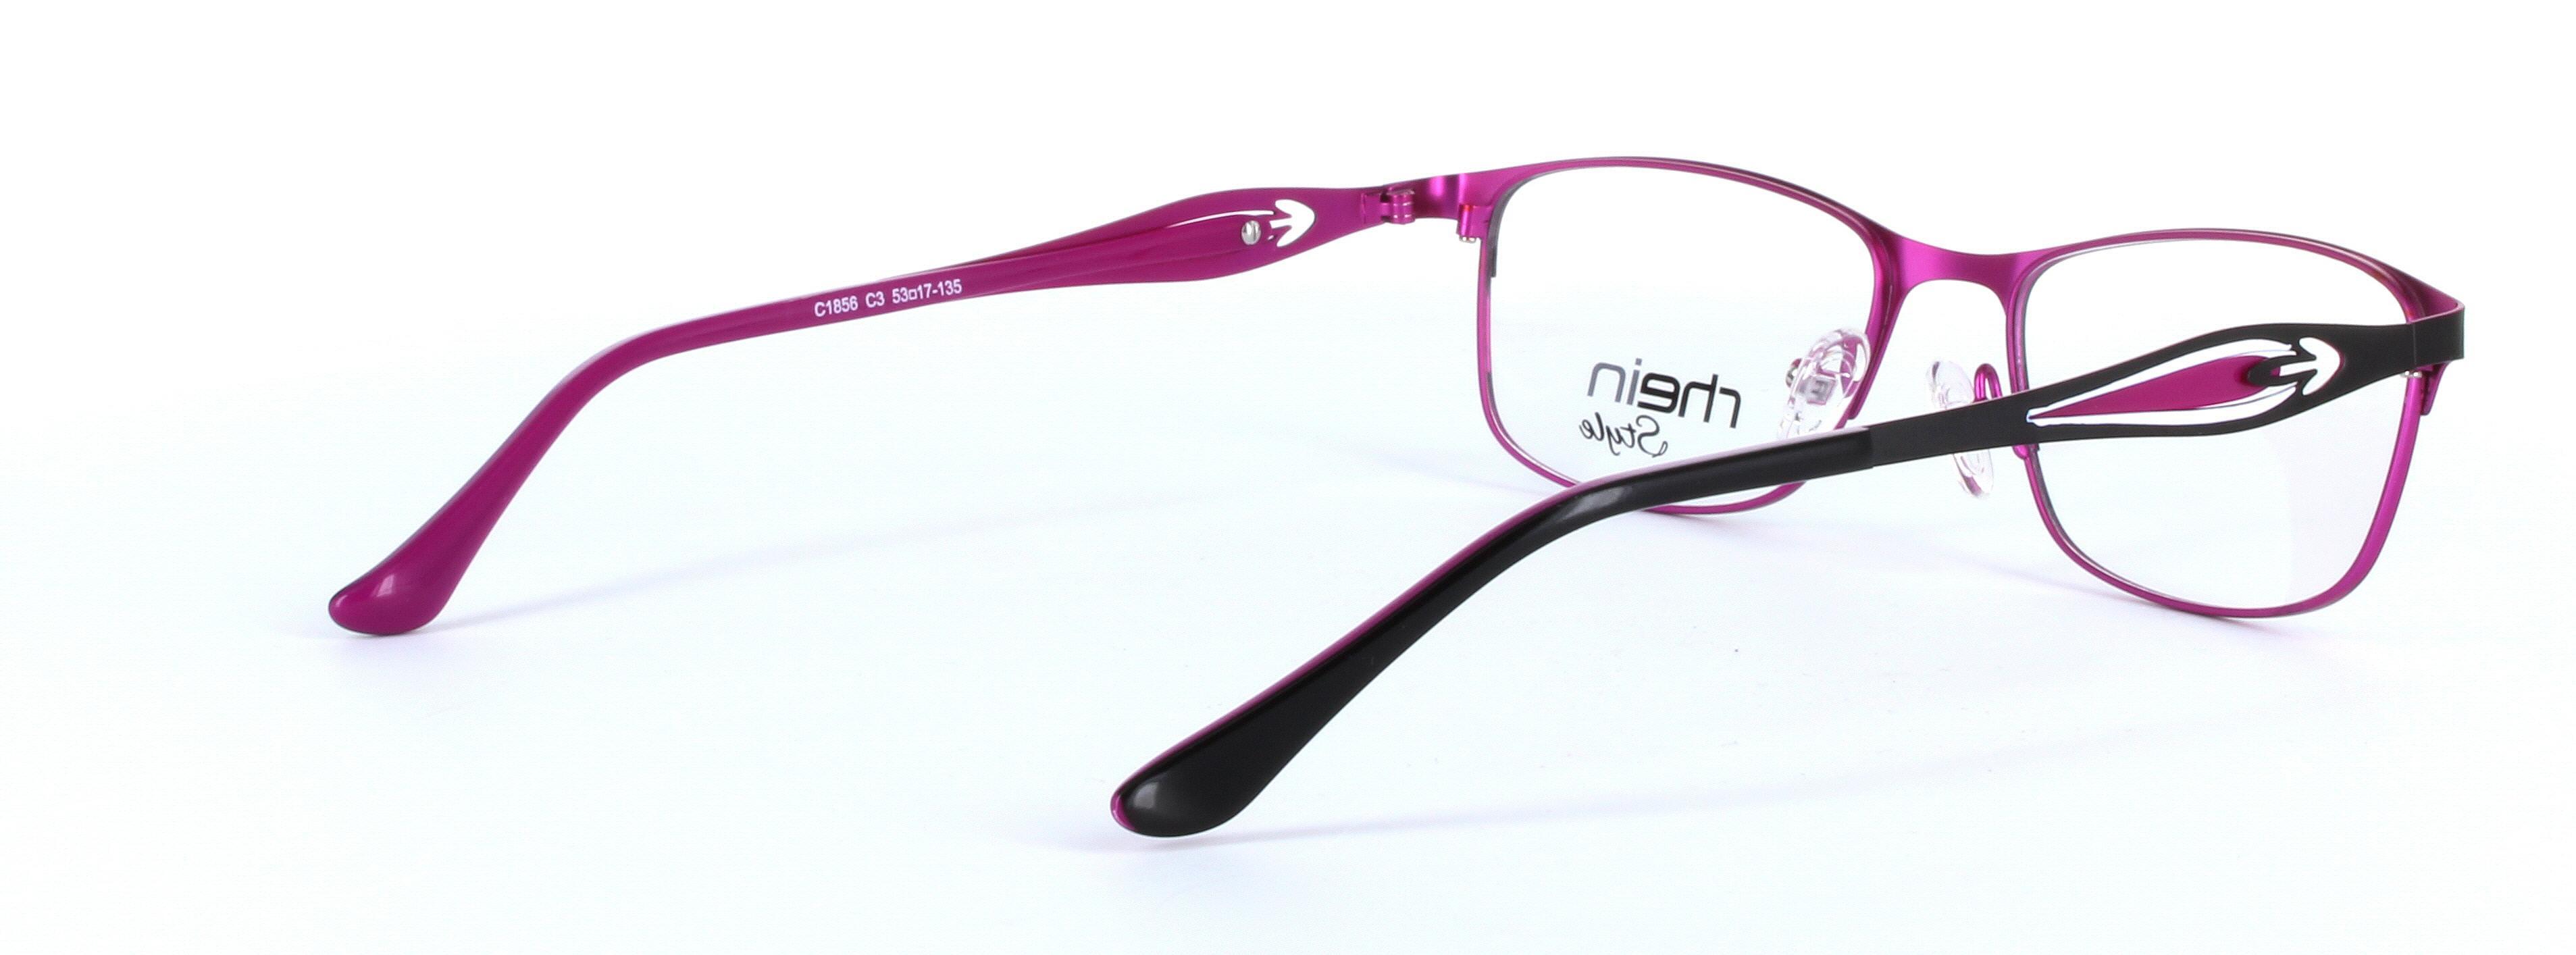 Canberra Black and Pink Full Rim Rectangular Metal Glasses - Image View 4